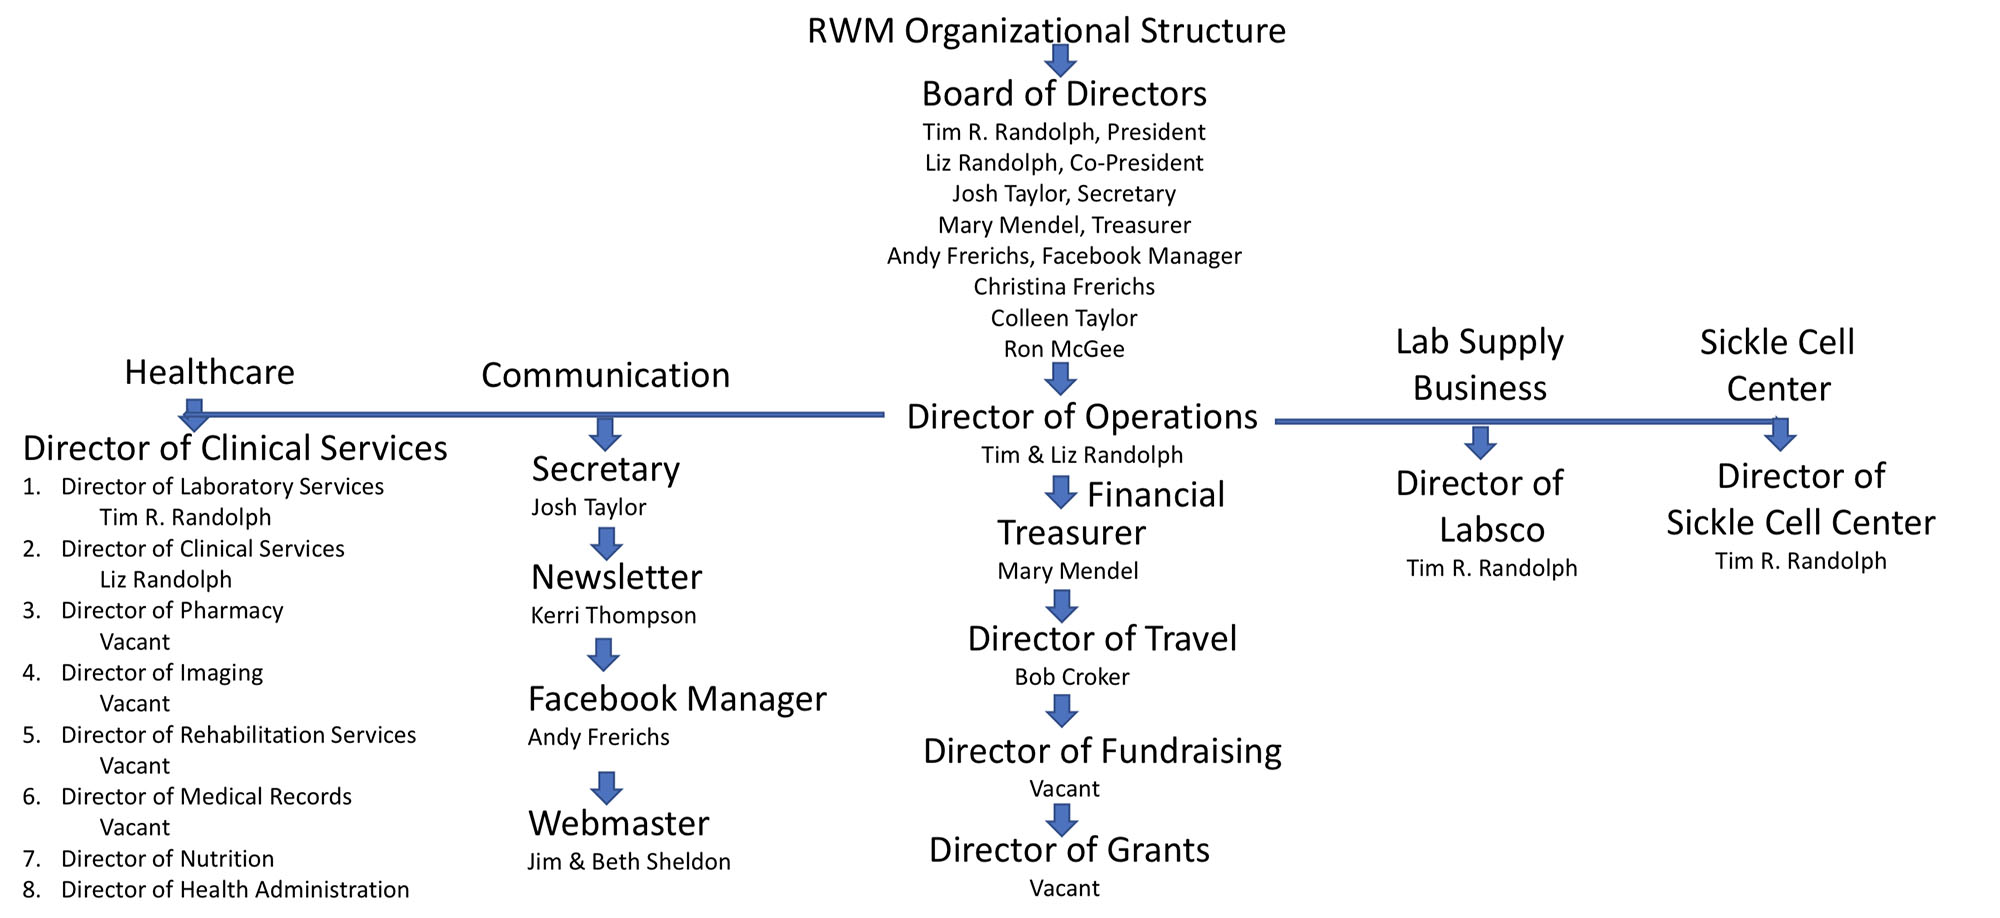 Organizational Structure of Randolph World Ministries, Inc